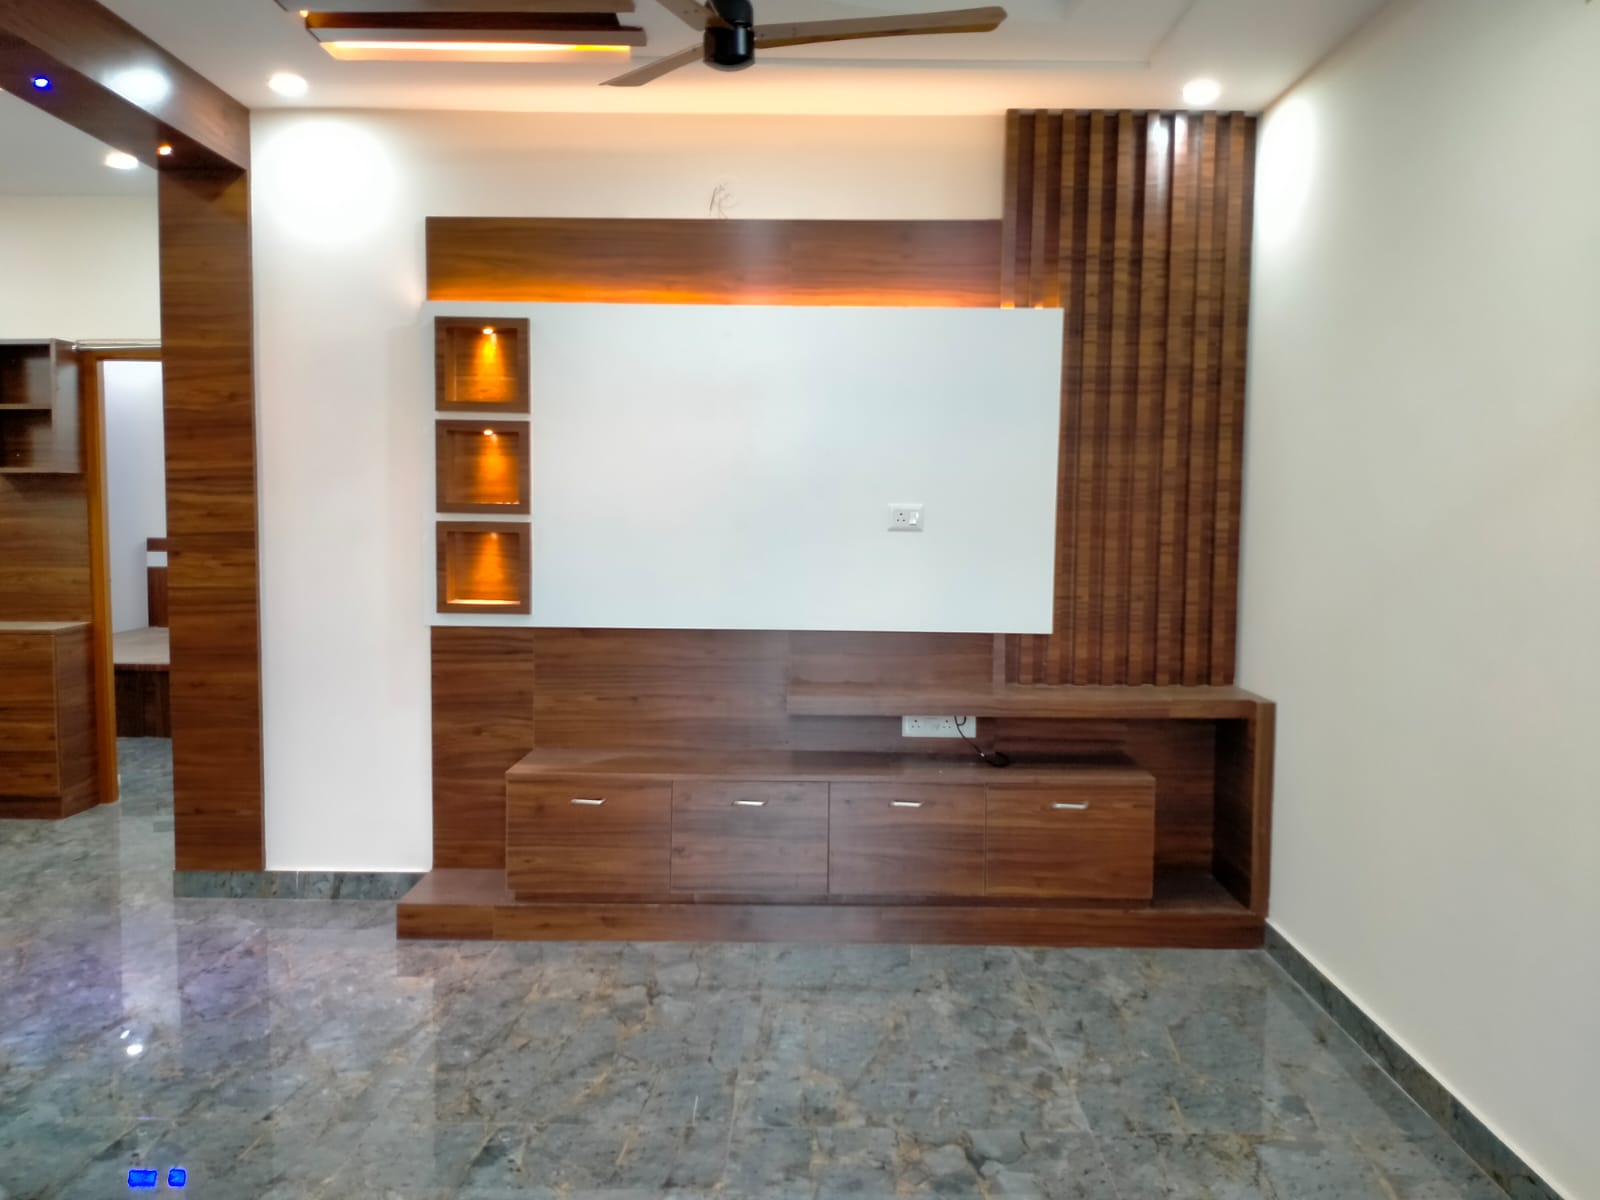 TV unit Interior Design by finehomez